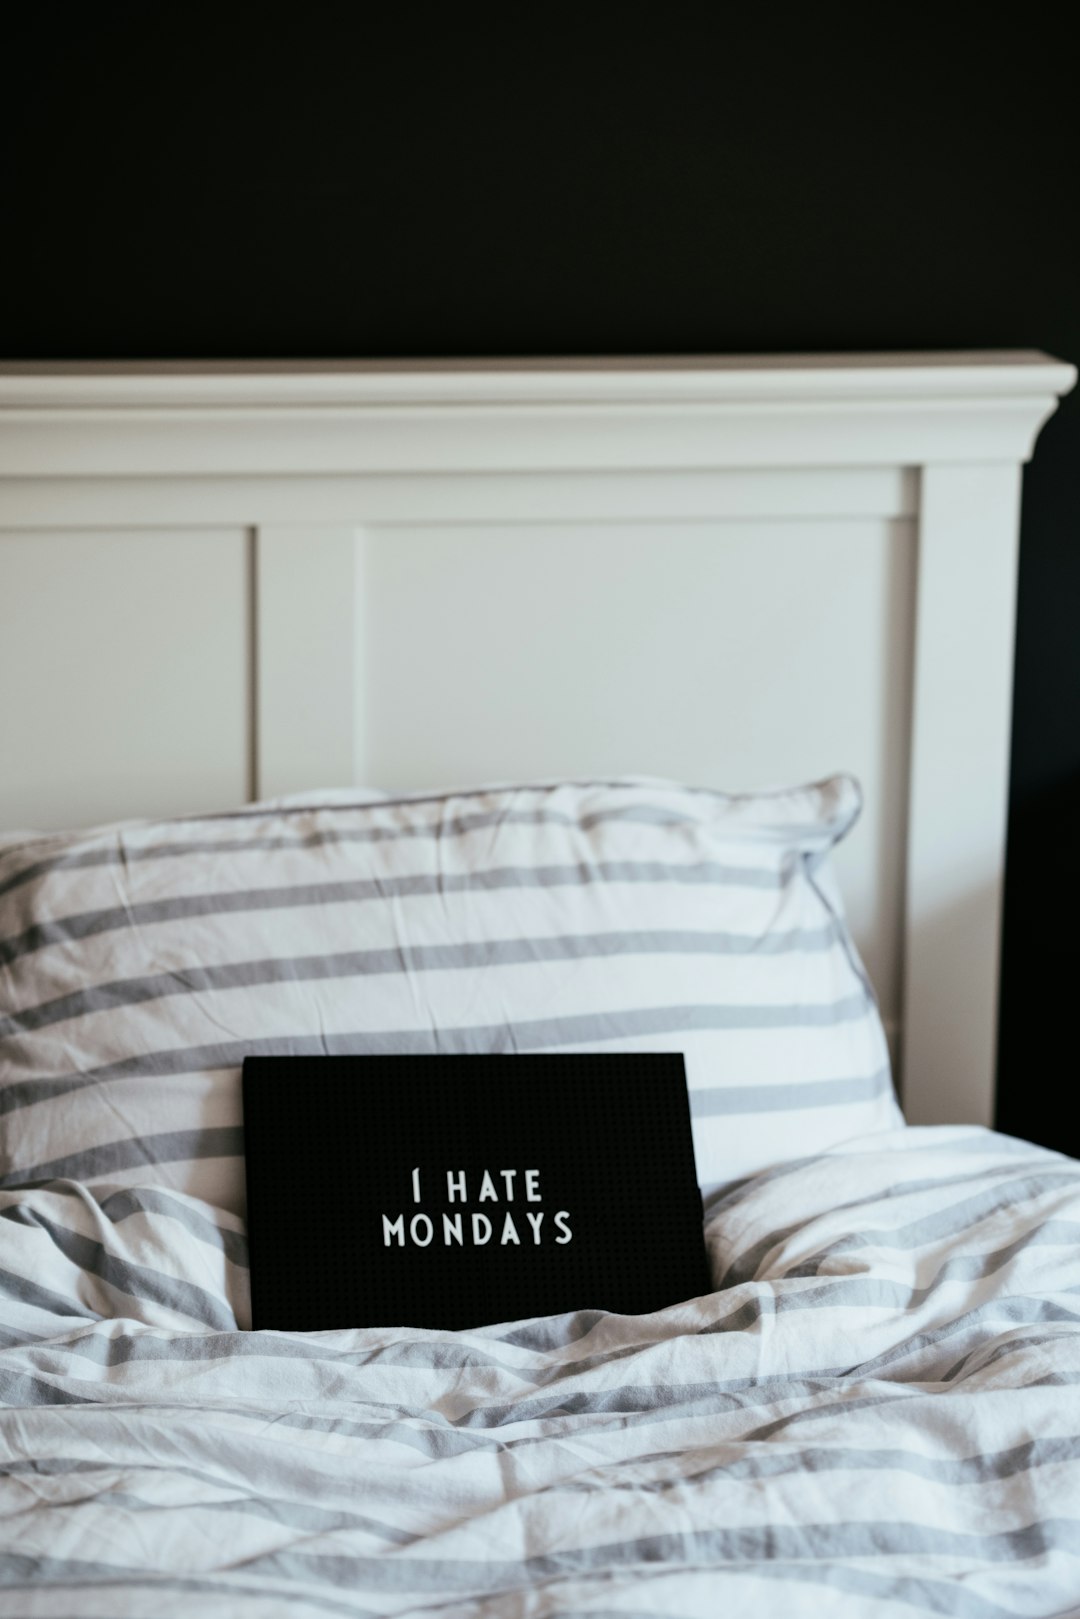  rectangular black i hate mondays printed board on bed single bed